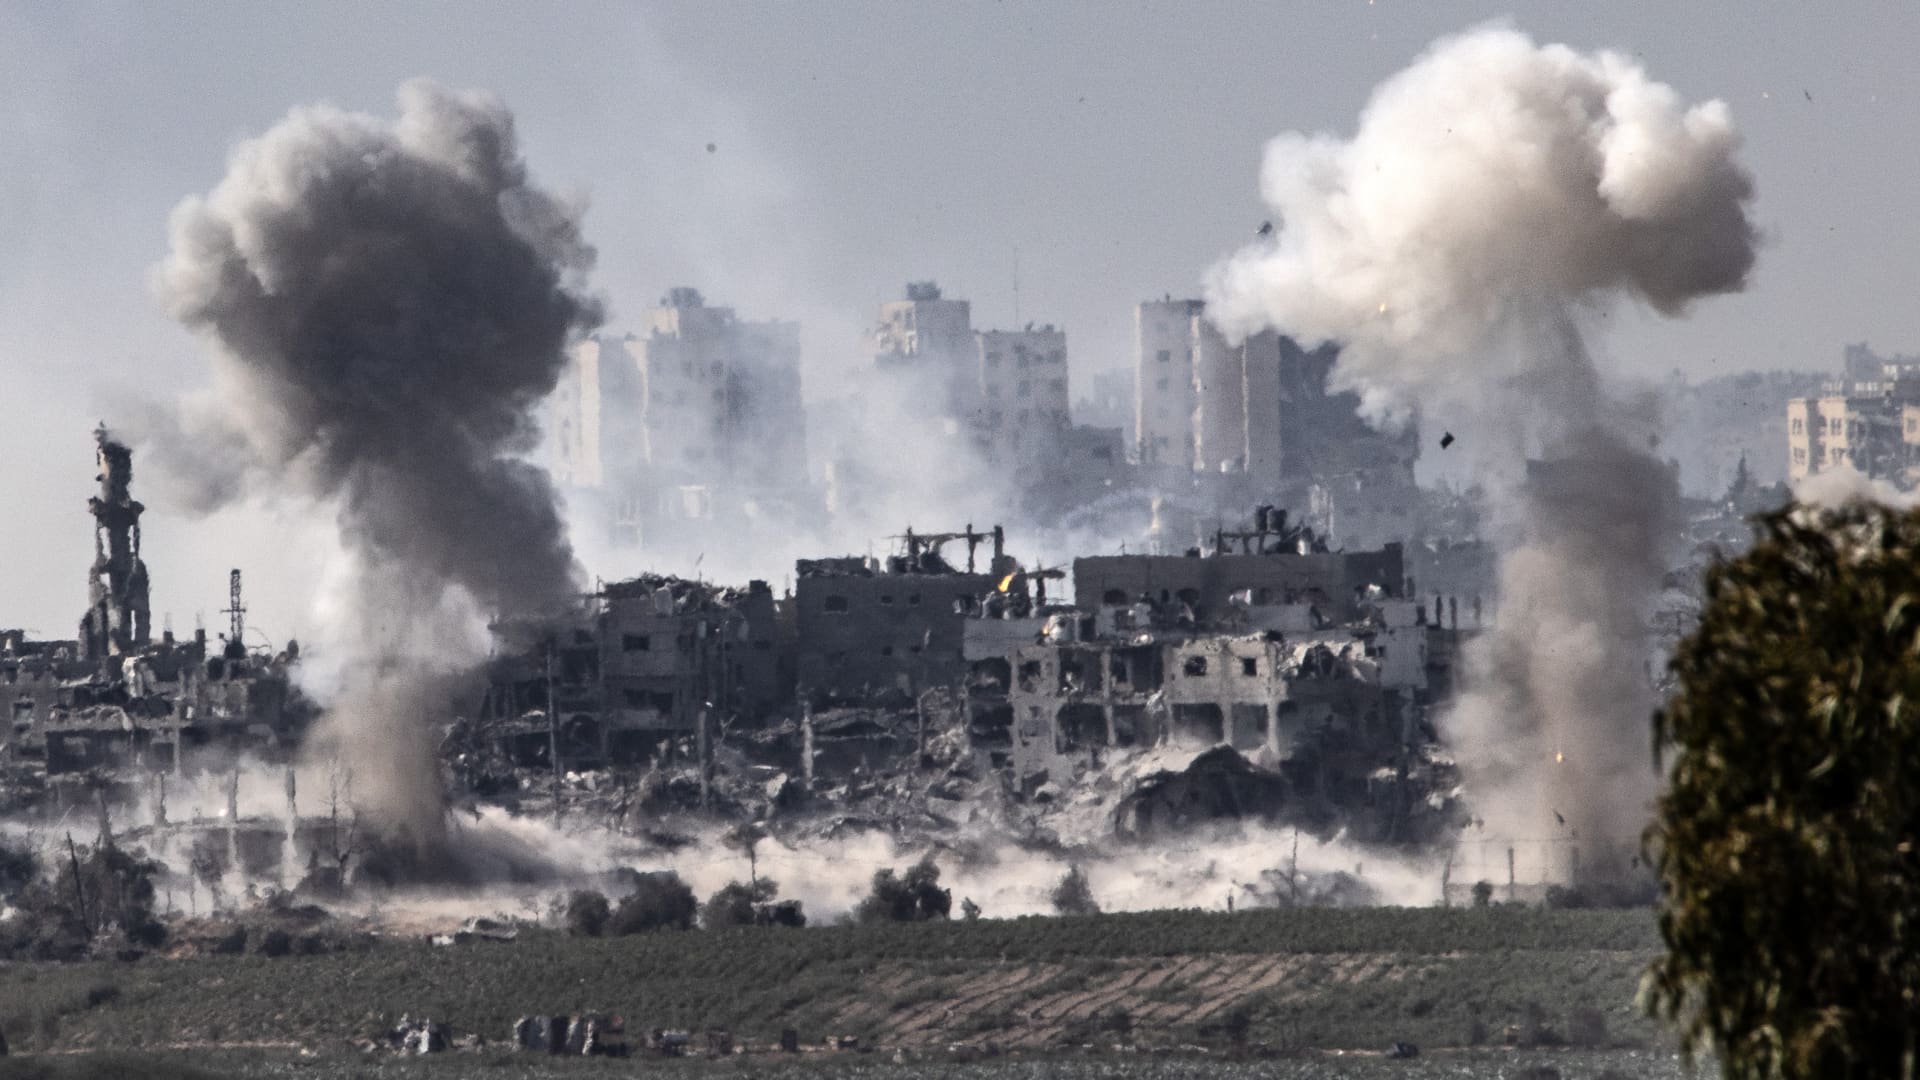 'Survival feels uncertain': Palestinians in Gaza describe desperation under Israeli bombardment